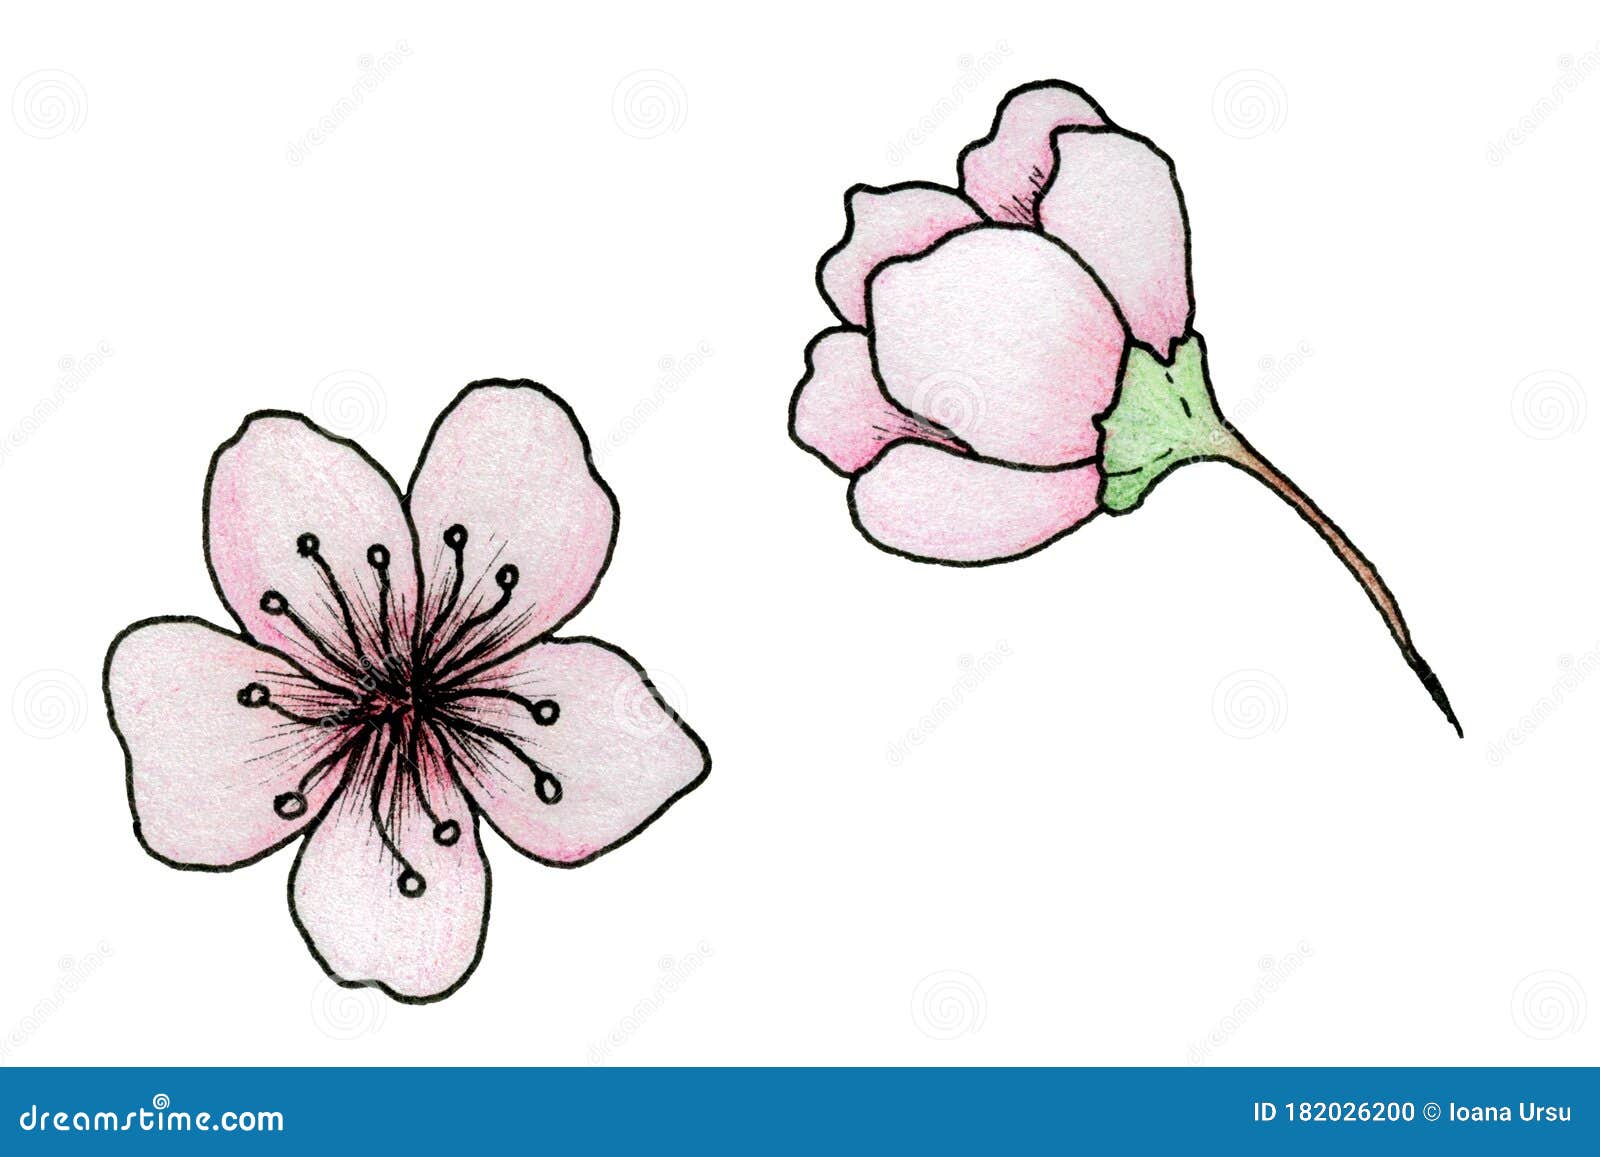 Cherry Blossom Illustration, Simple Hand Drawn Sakura Flowers ...